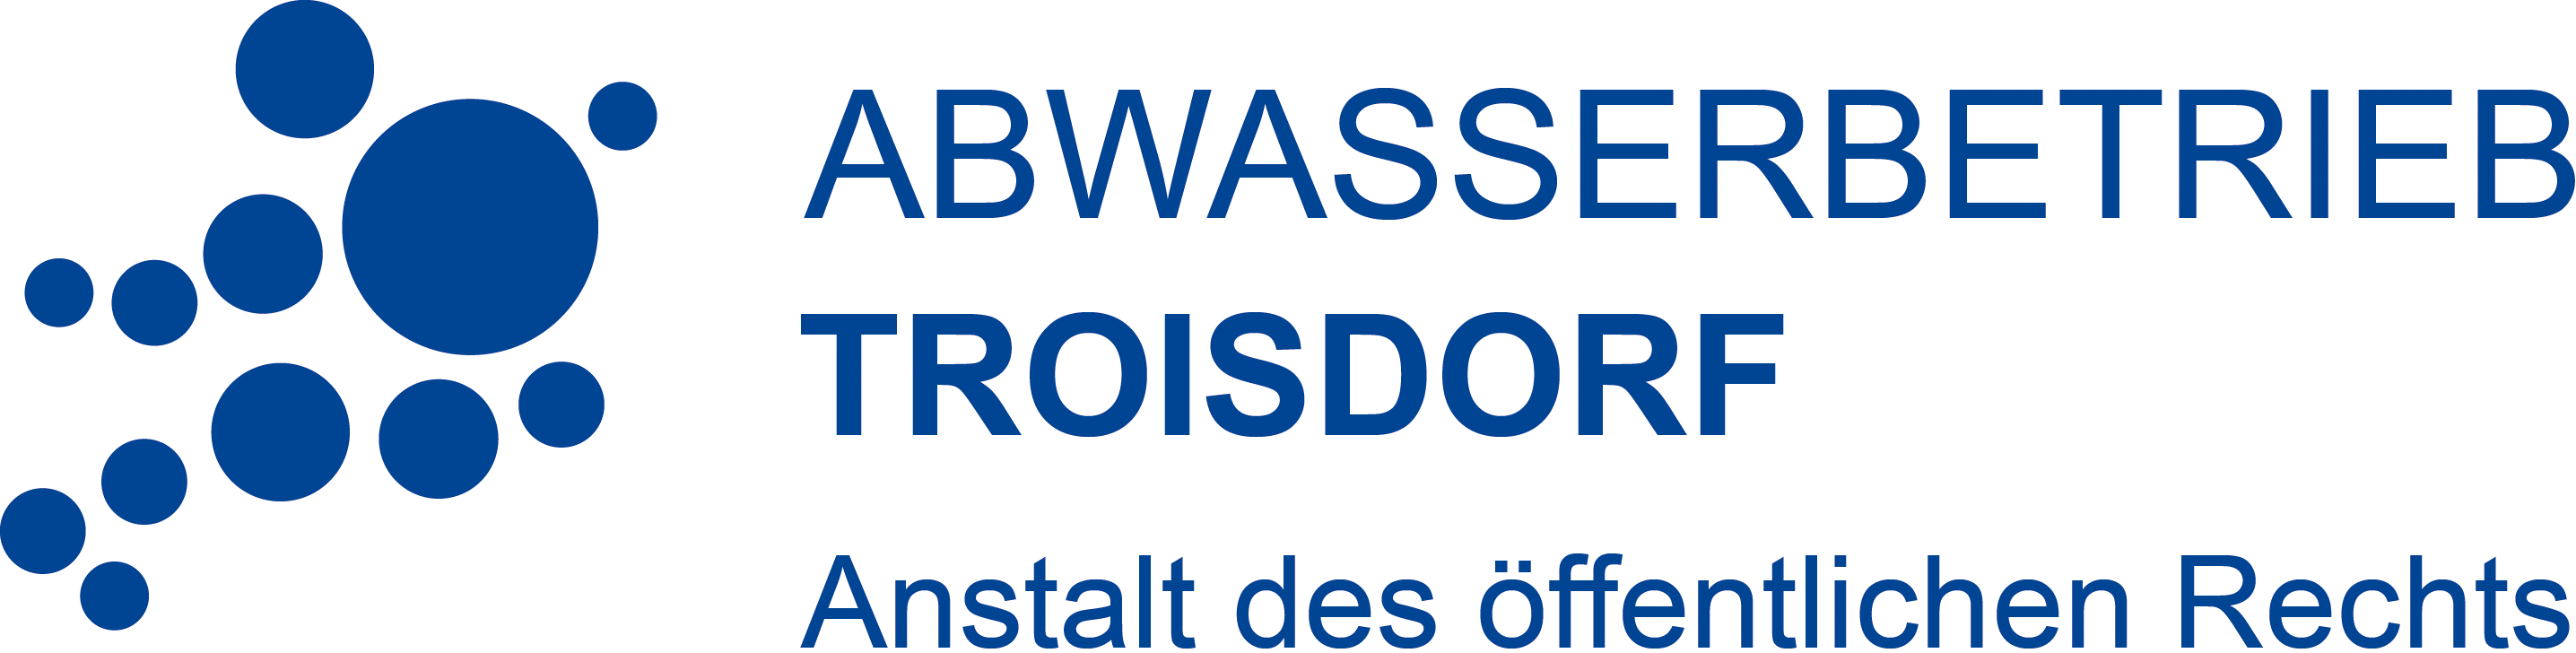 Abwasserbetrieb Troisdorf AöR Logo